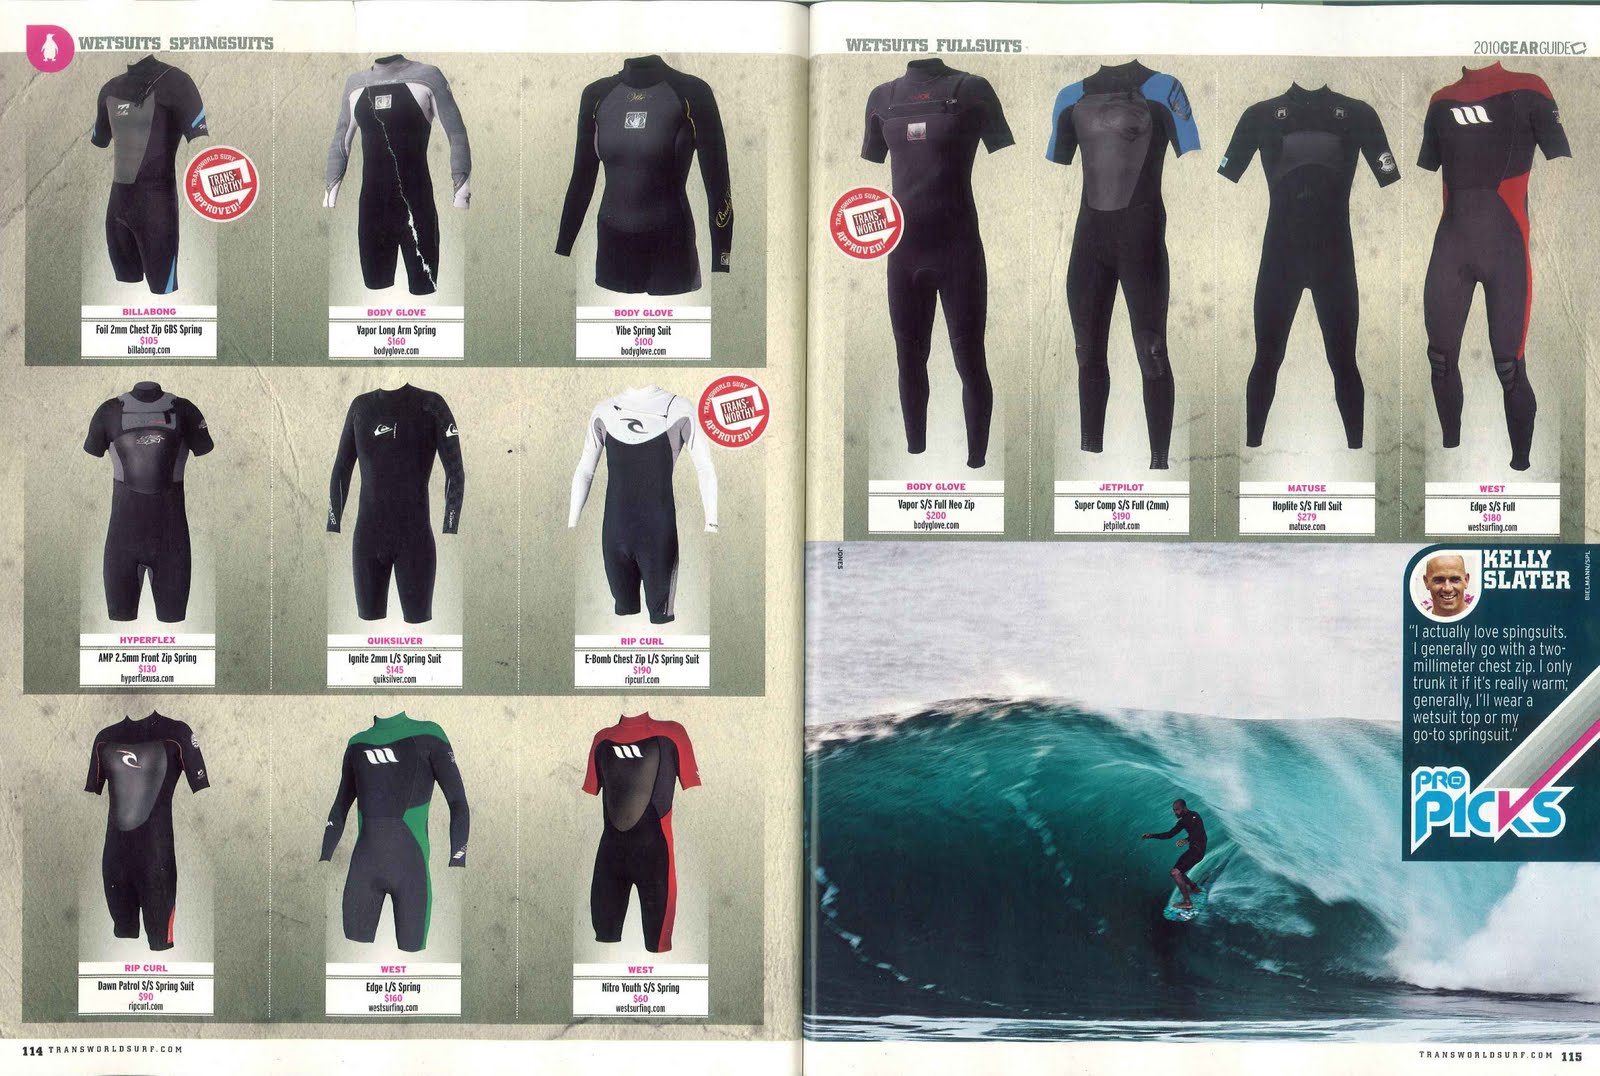 Quiksilver PR: Surf Mag's 2010 Gear Guide